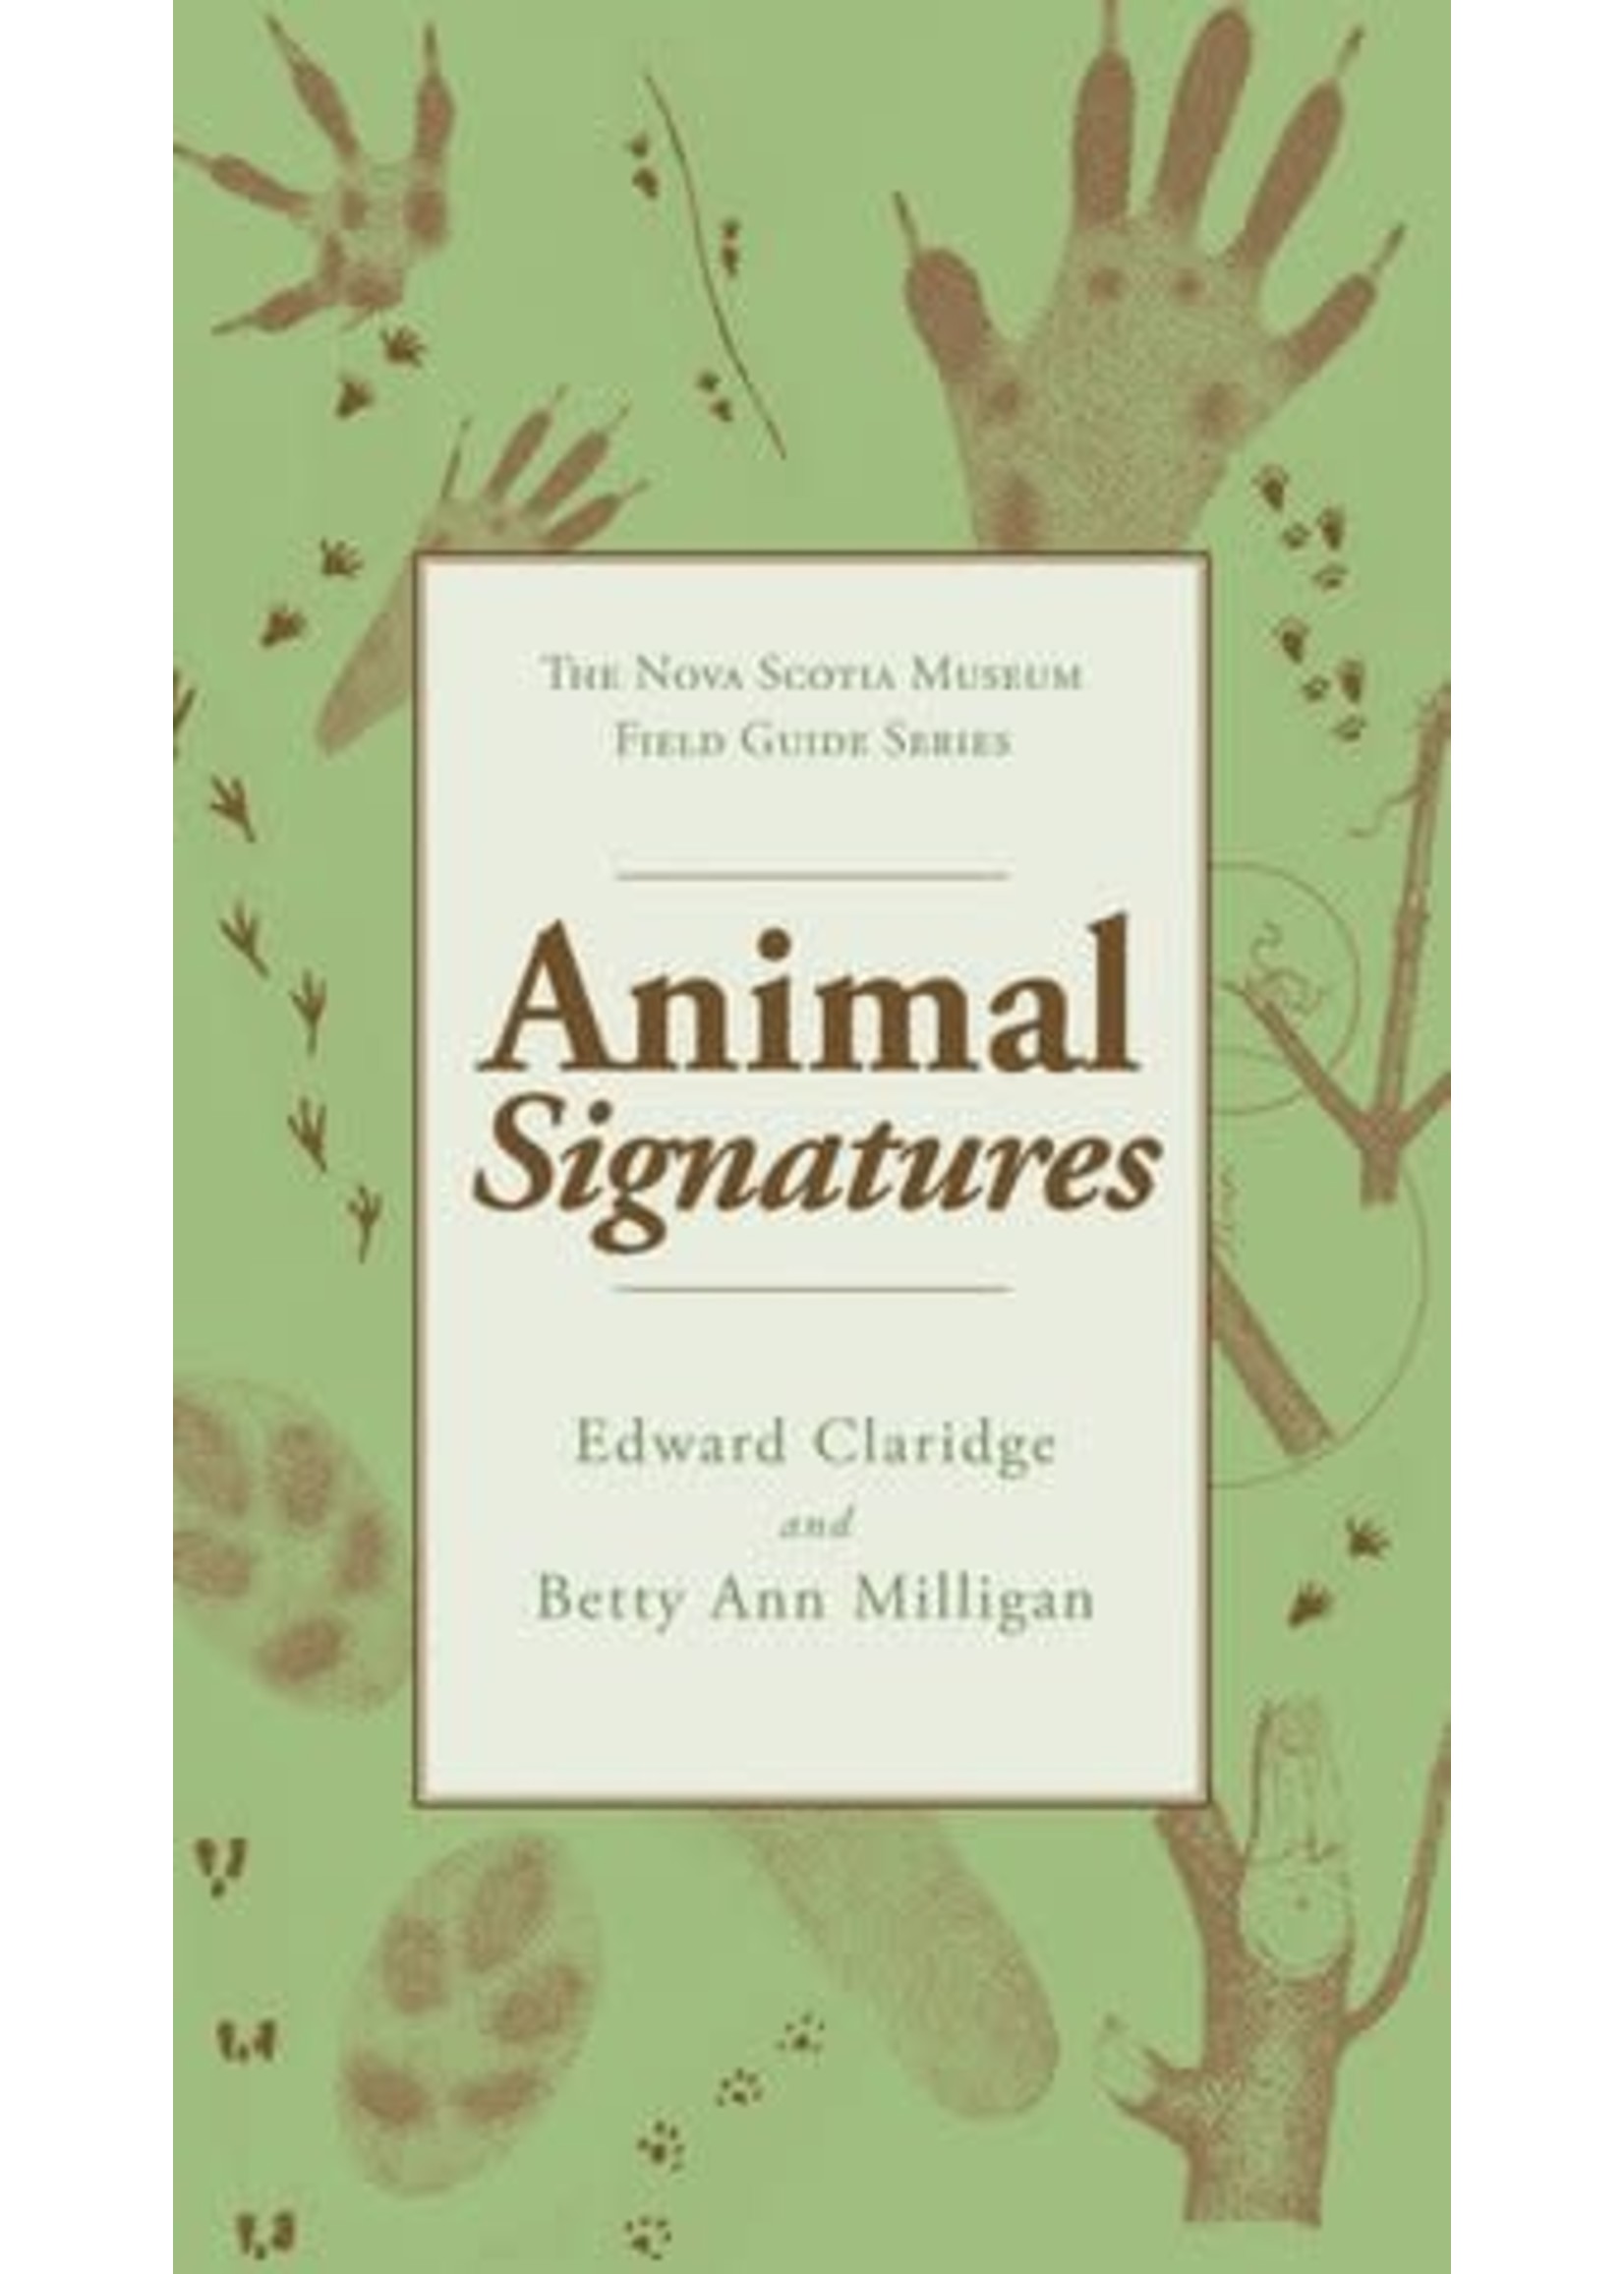 Animal Signatures by Edward Claridge, Betty Ann Milligan